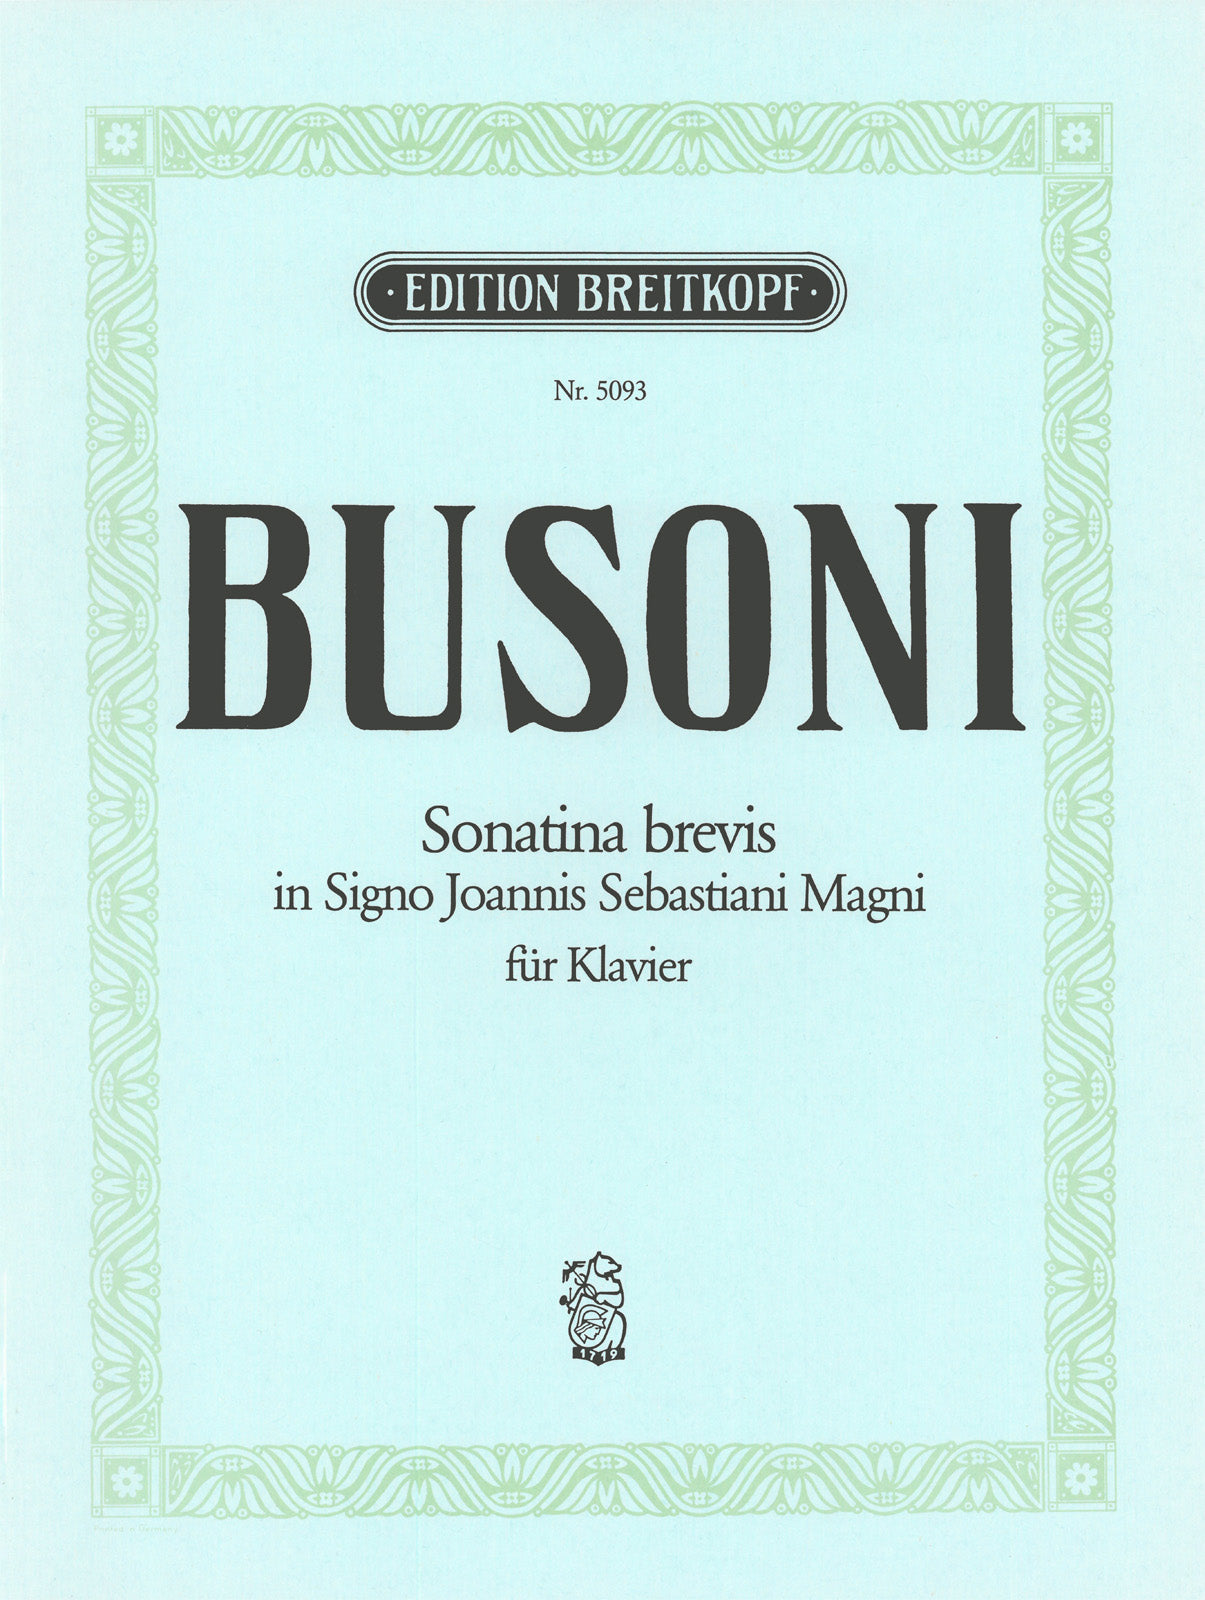 Busoni: Sonatina brevis No. 5, BV 280